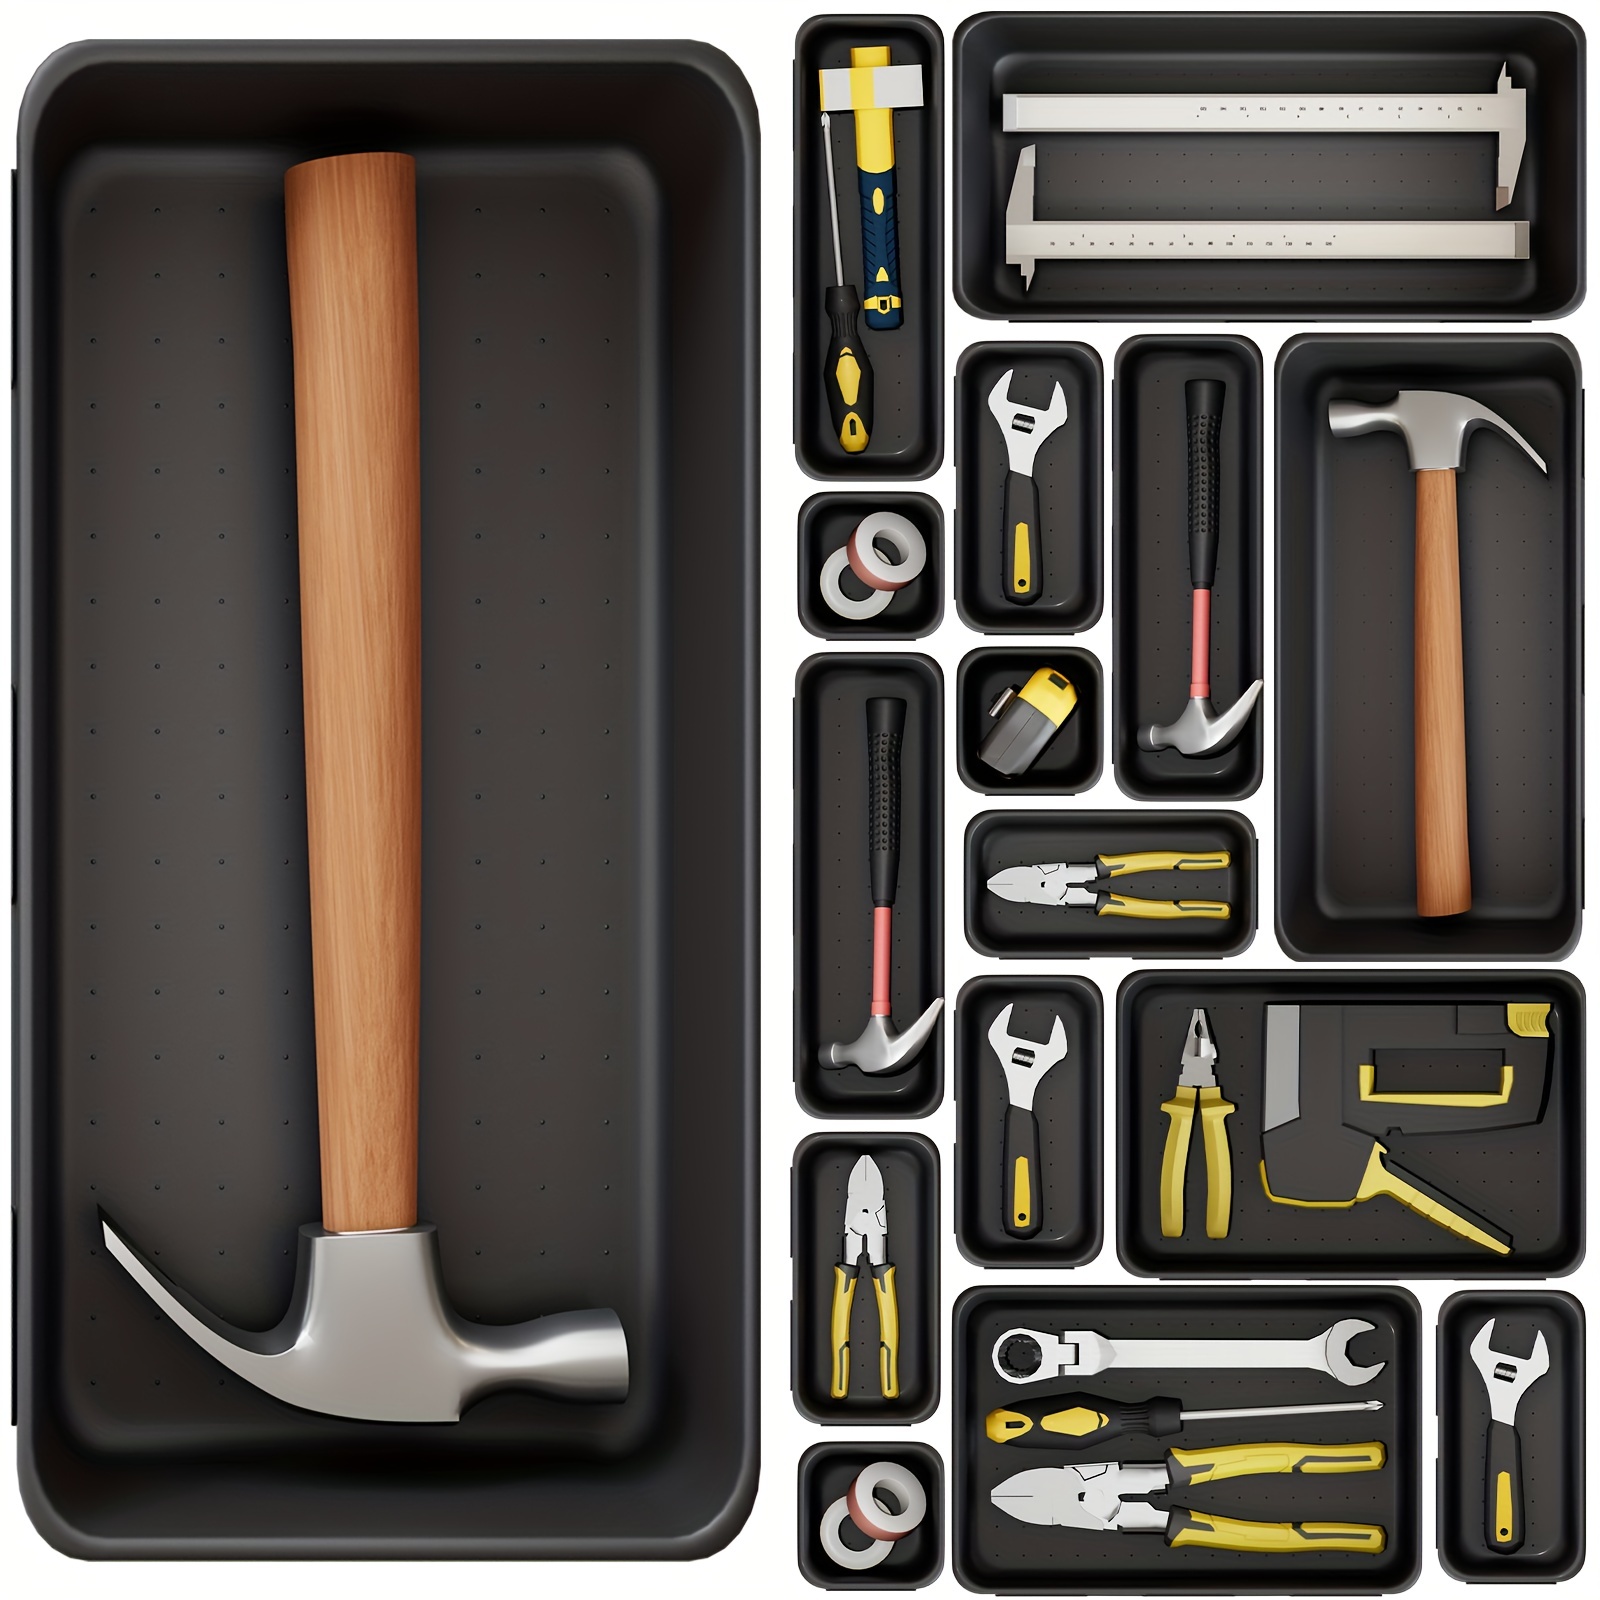 Black & Decker Tool Bag and Multi Tier Tool Box